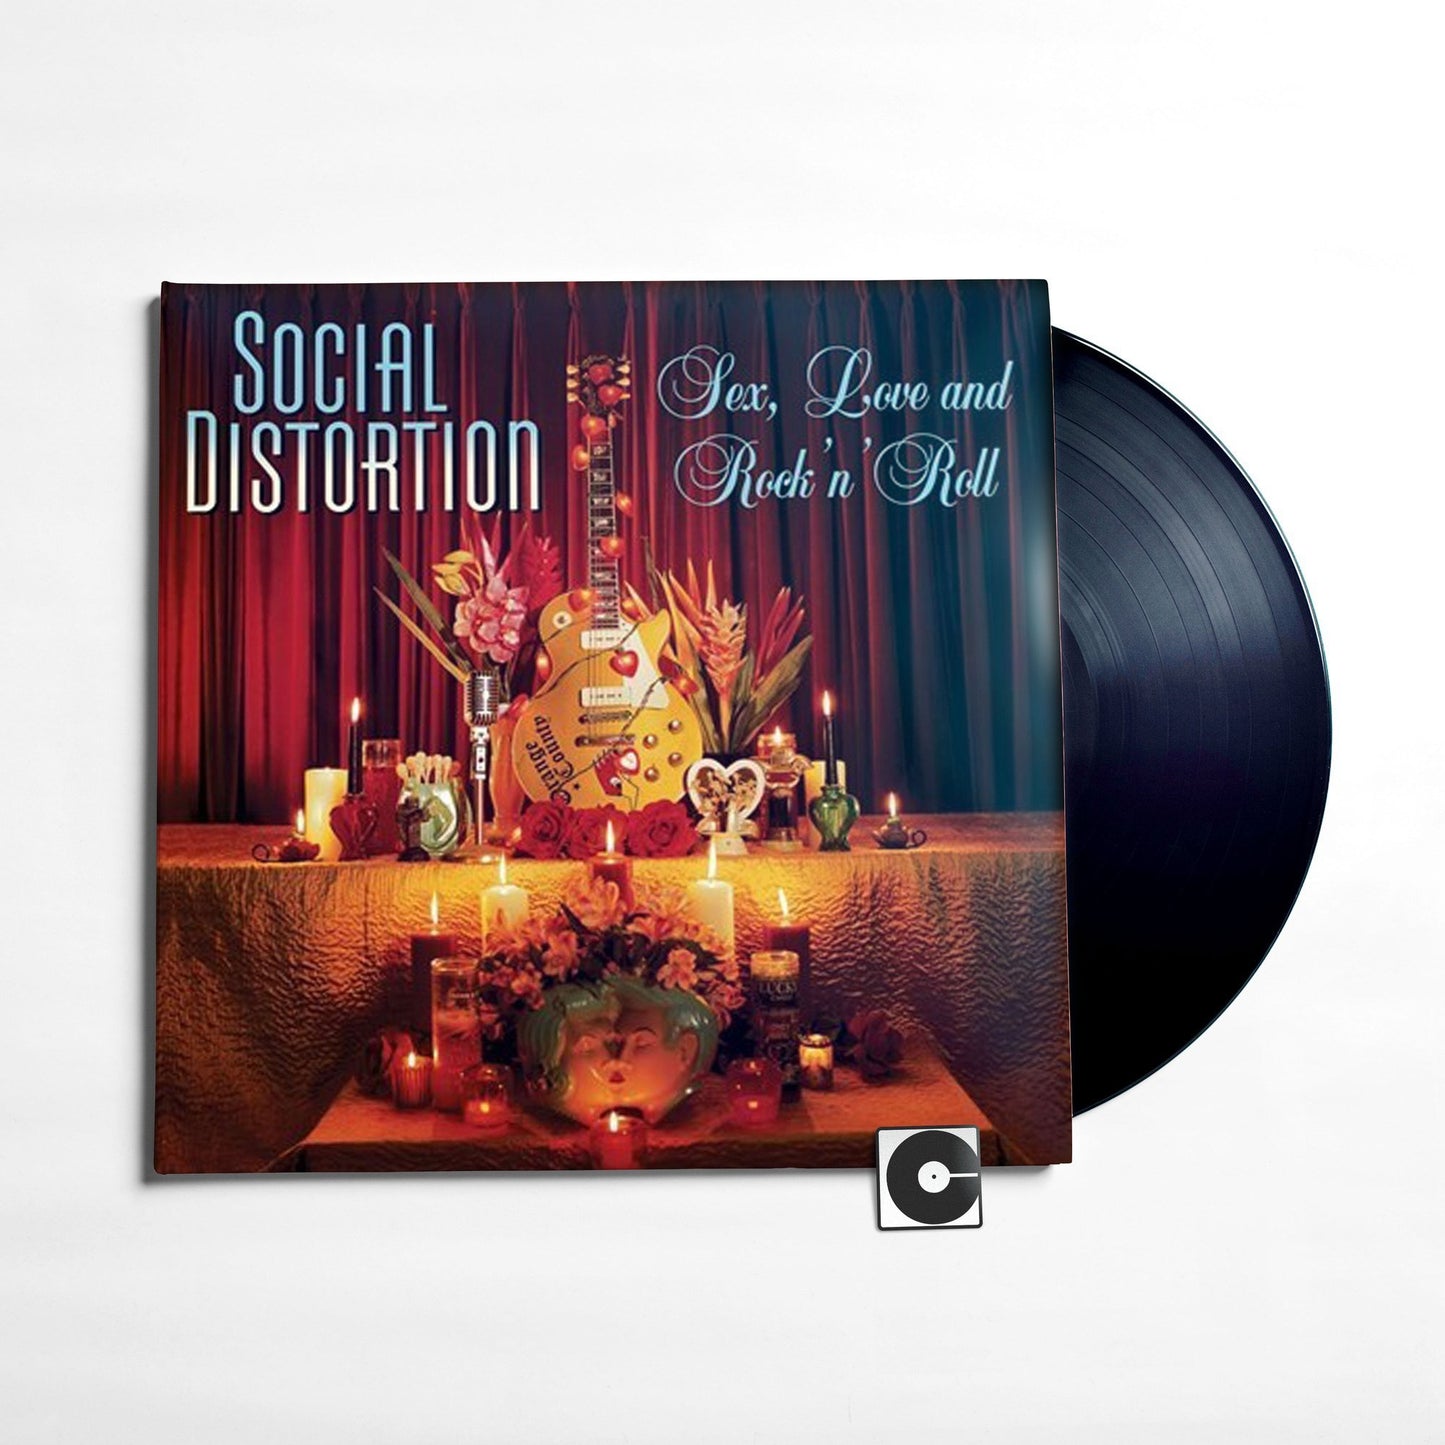 Social Distortion - "Sex, Love & Rock N Roll"